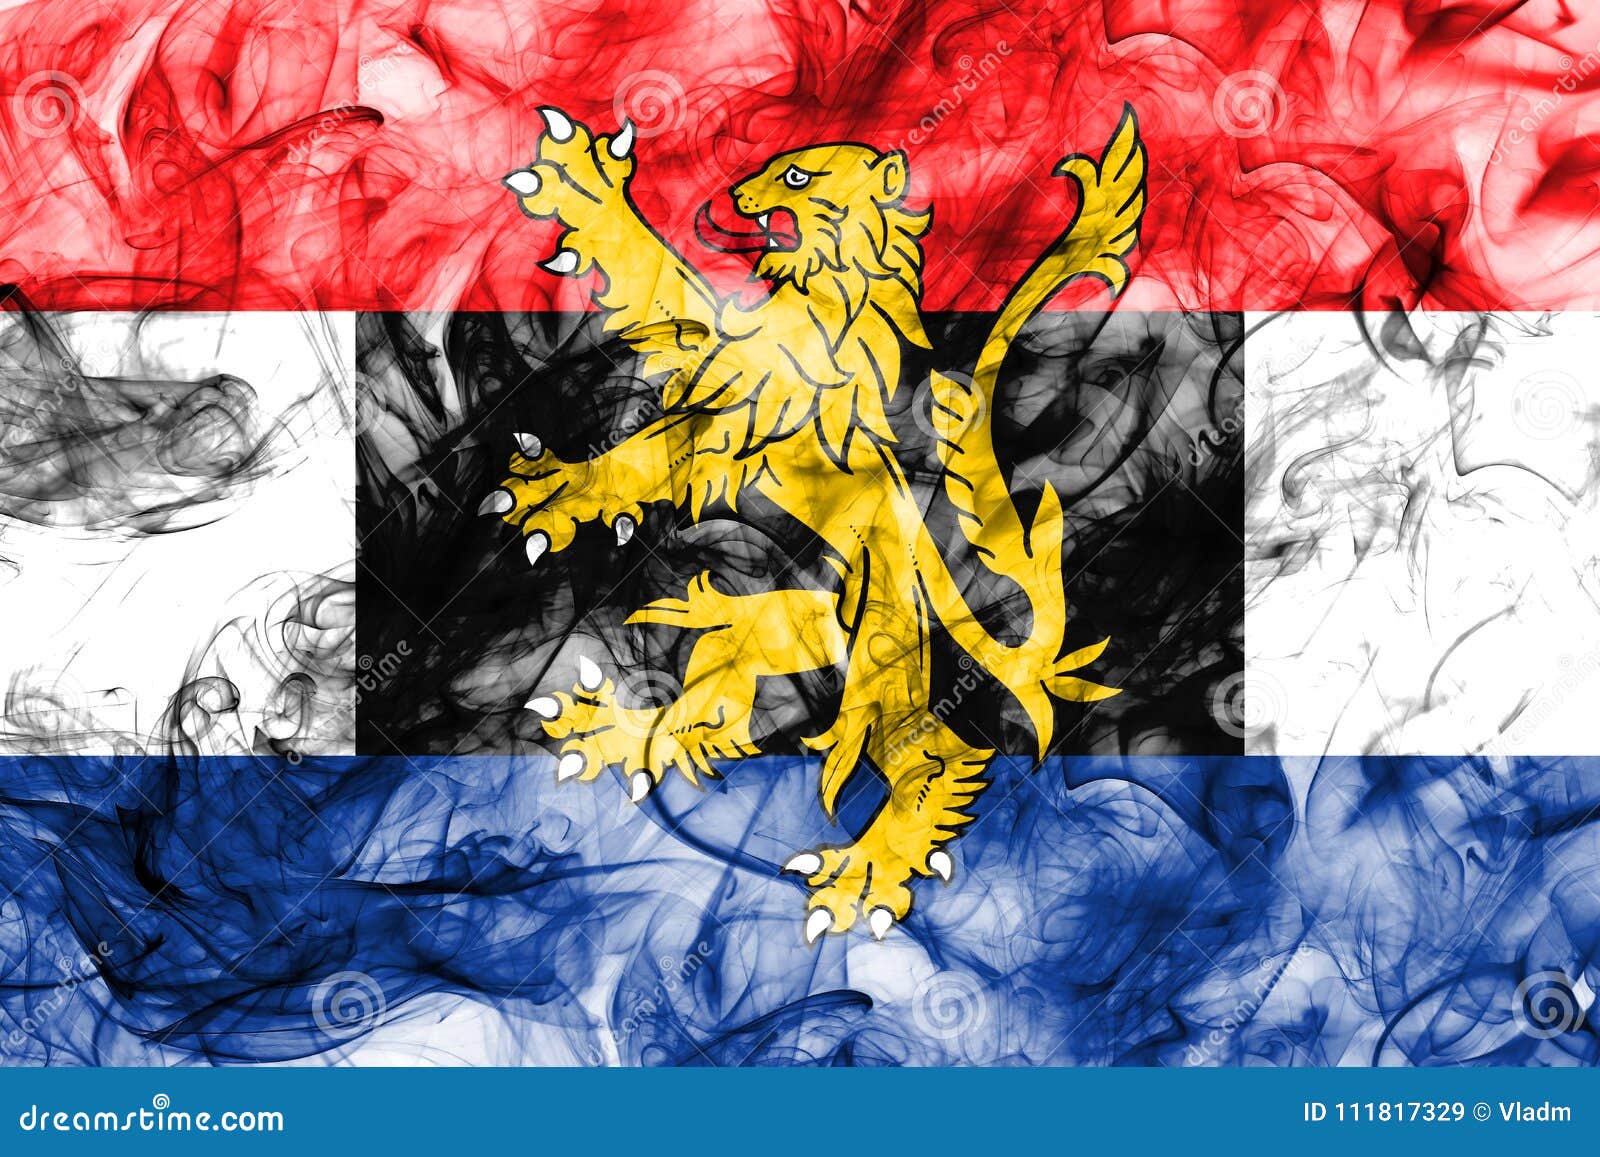 benelux smoke flag, politico-economic union of belgium, netherlands, luxembourg